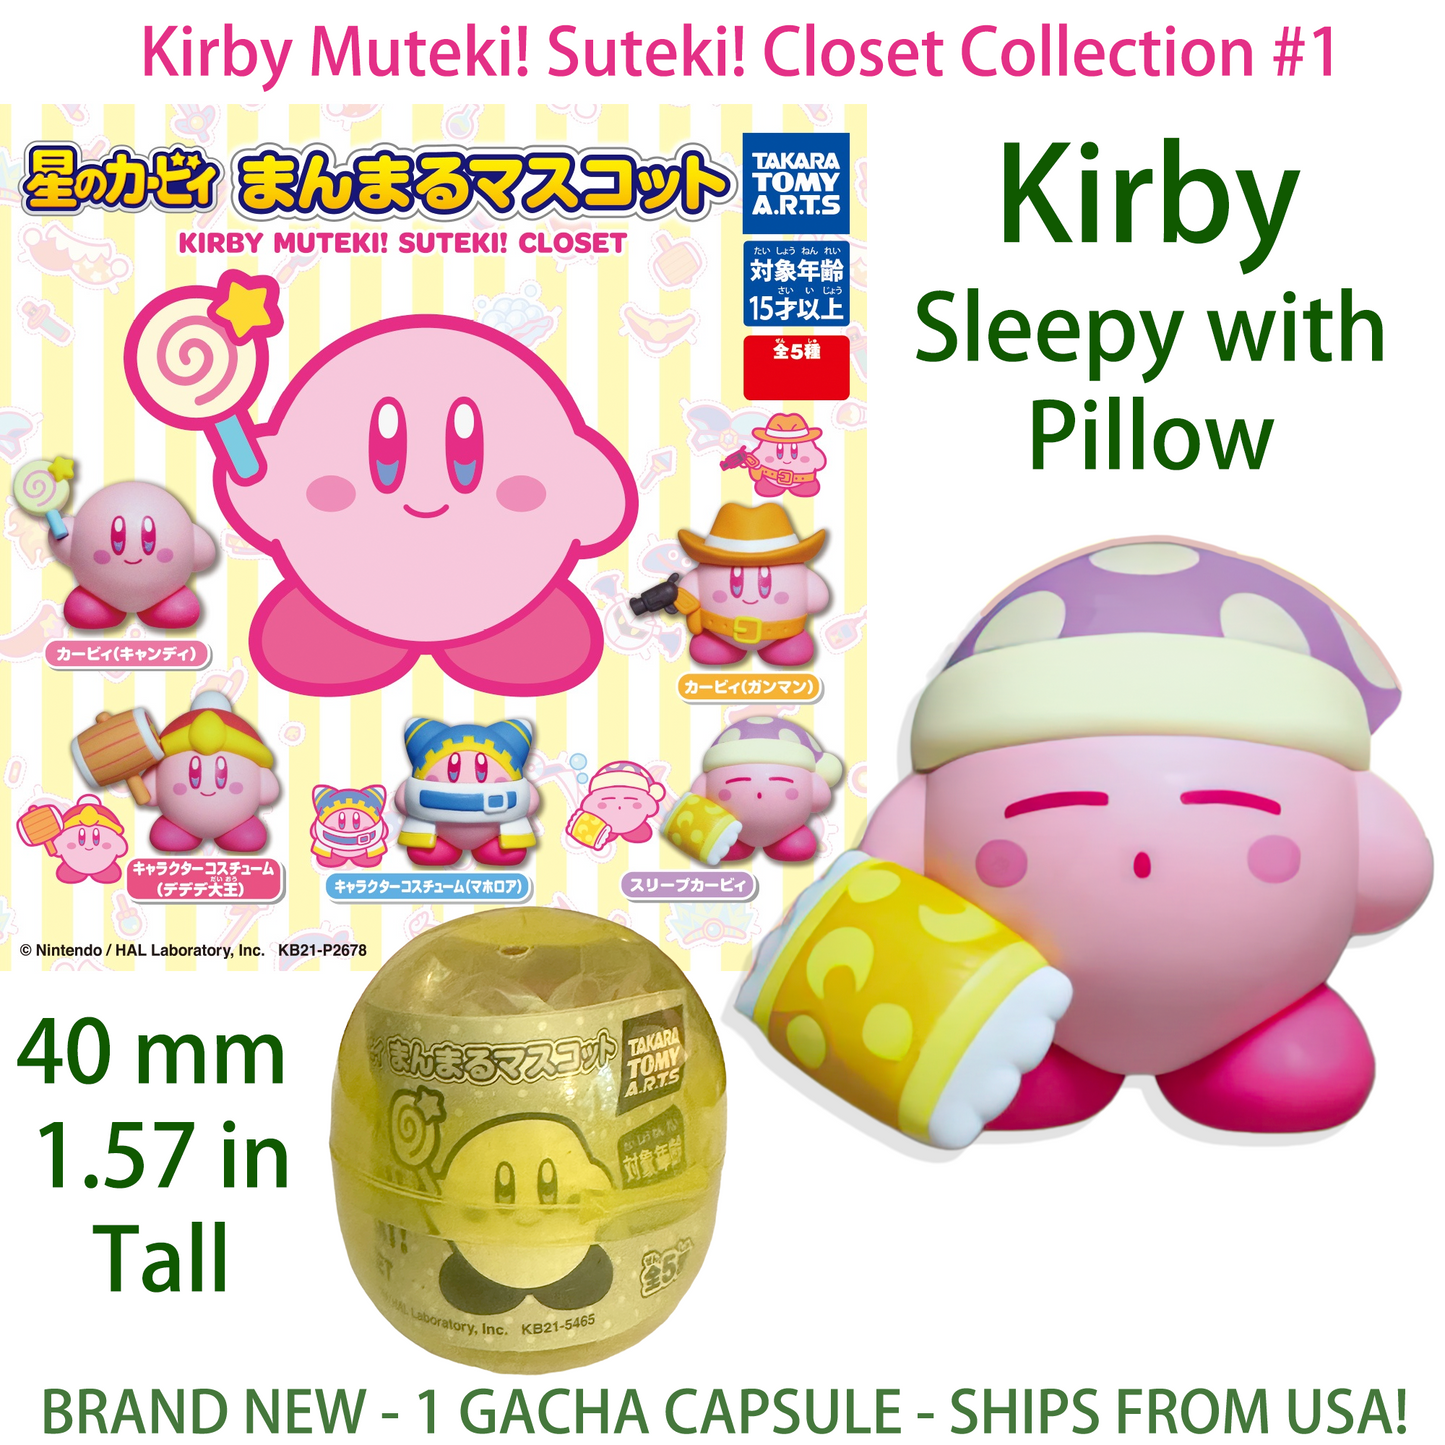 KIRBY'S SUTEKI MUTEKI! Gashapon Capsule Figure COMPLETE COLLECTION (5 Toys, NEW)